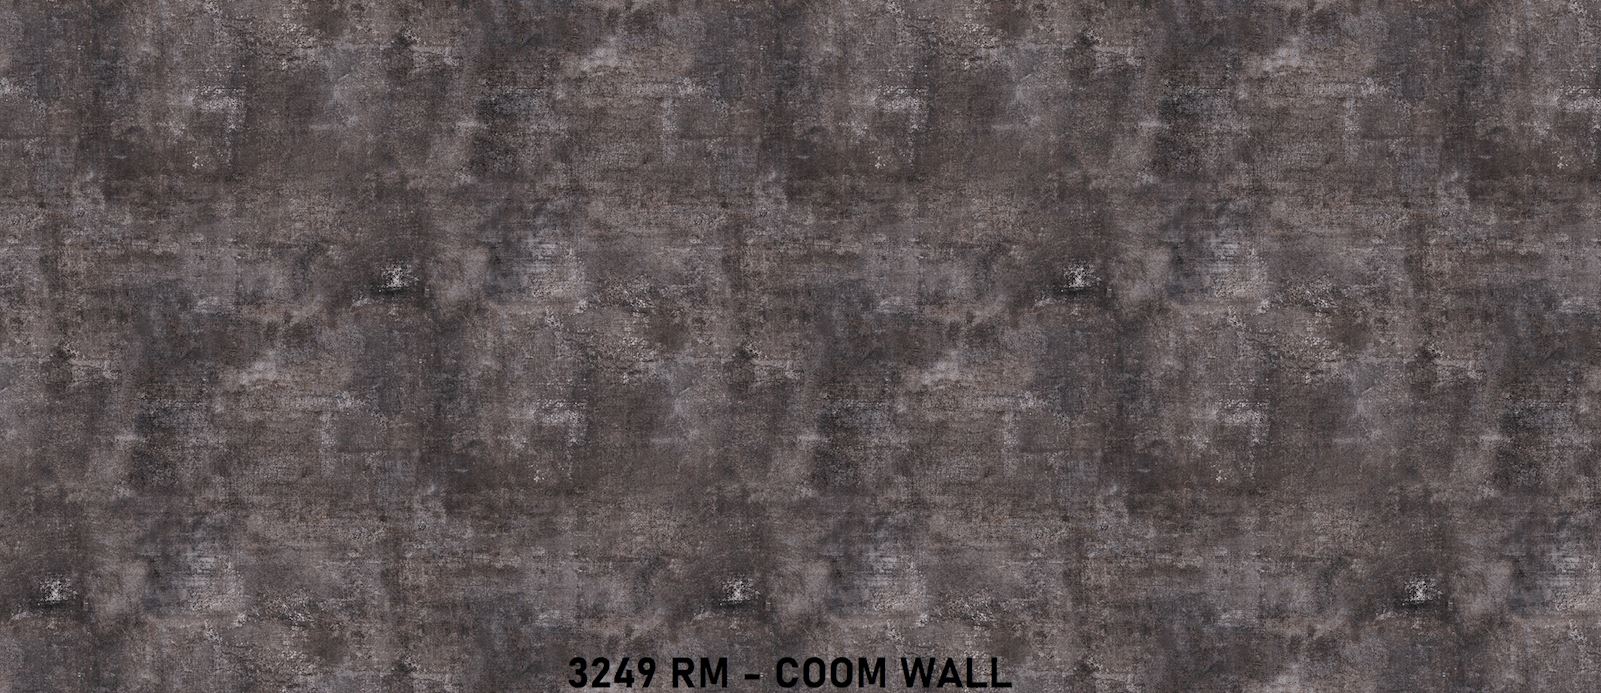 3249 RM Coom Wall 1